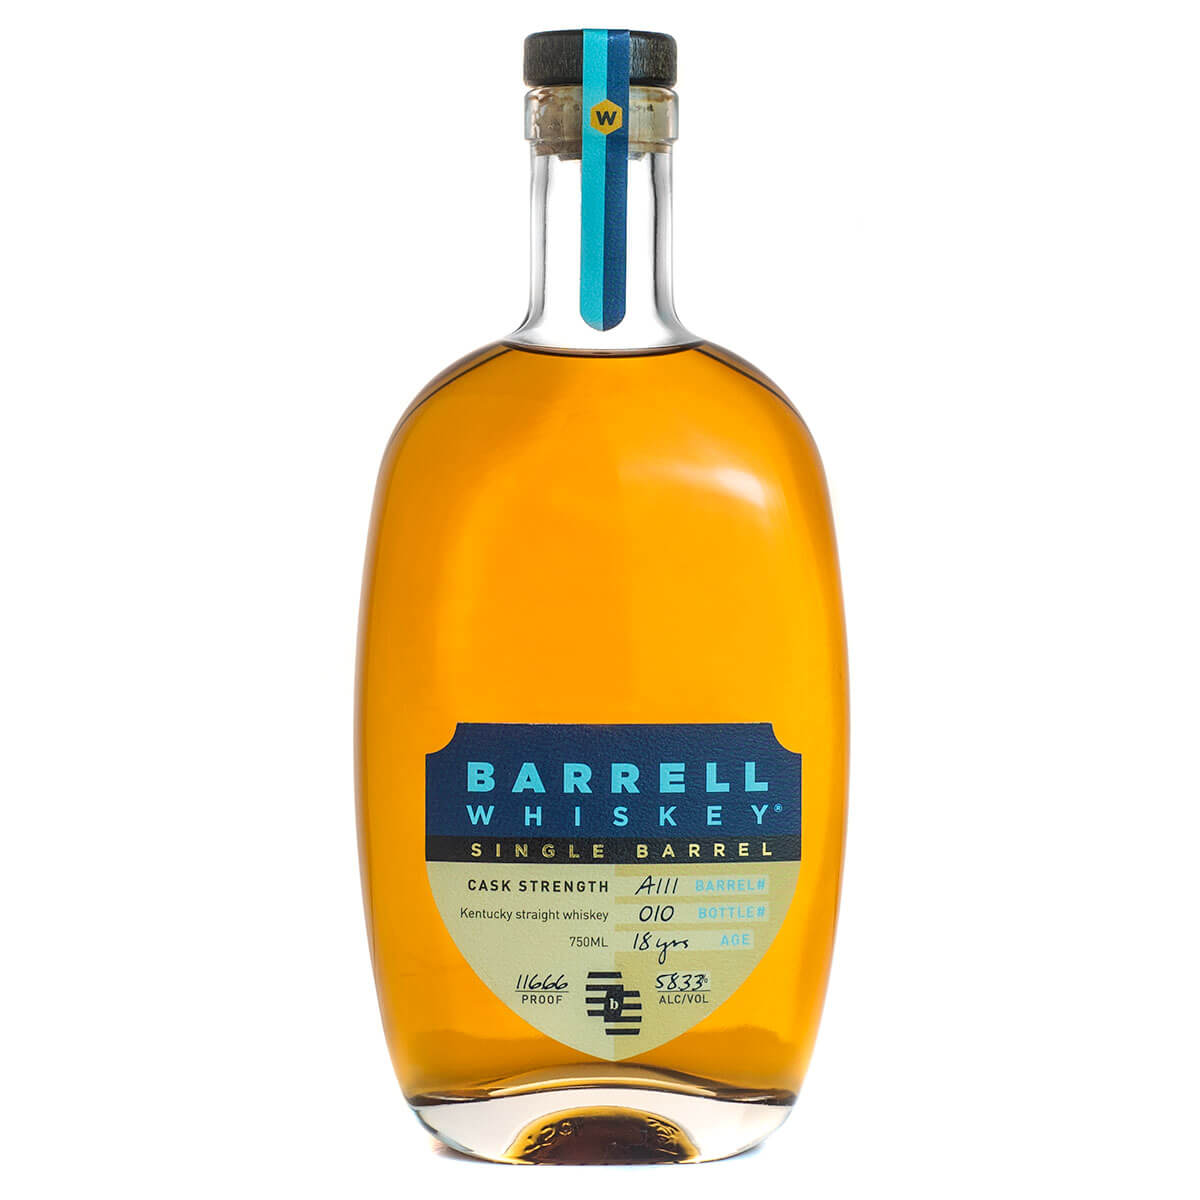 Barrell Whiskey Single Barrel bottle